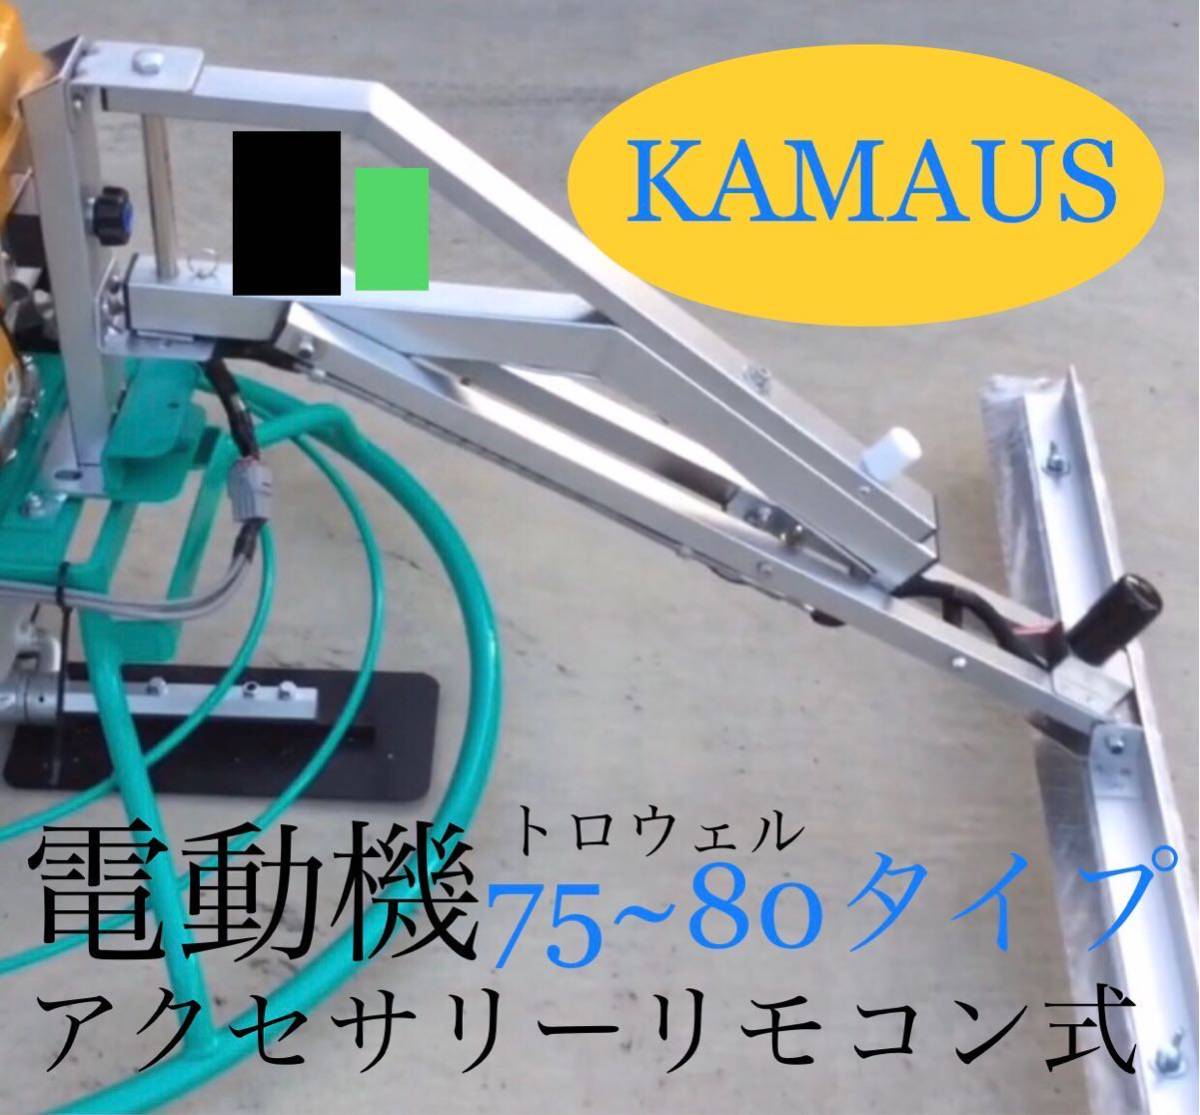 KAMAUS 電動機アクセサリーリモコン式。トロウェル 75~80 cmタイプ。バッテリー充電器セット。お得の注文できます。